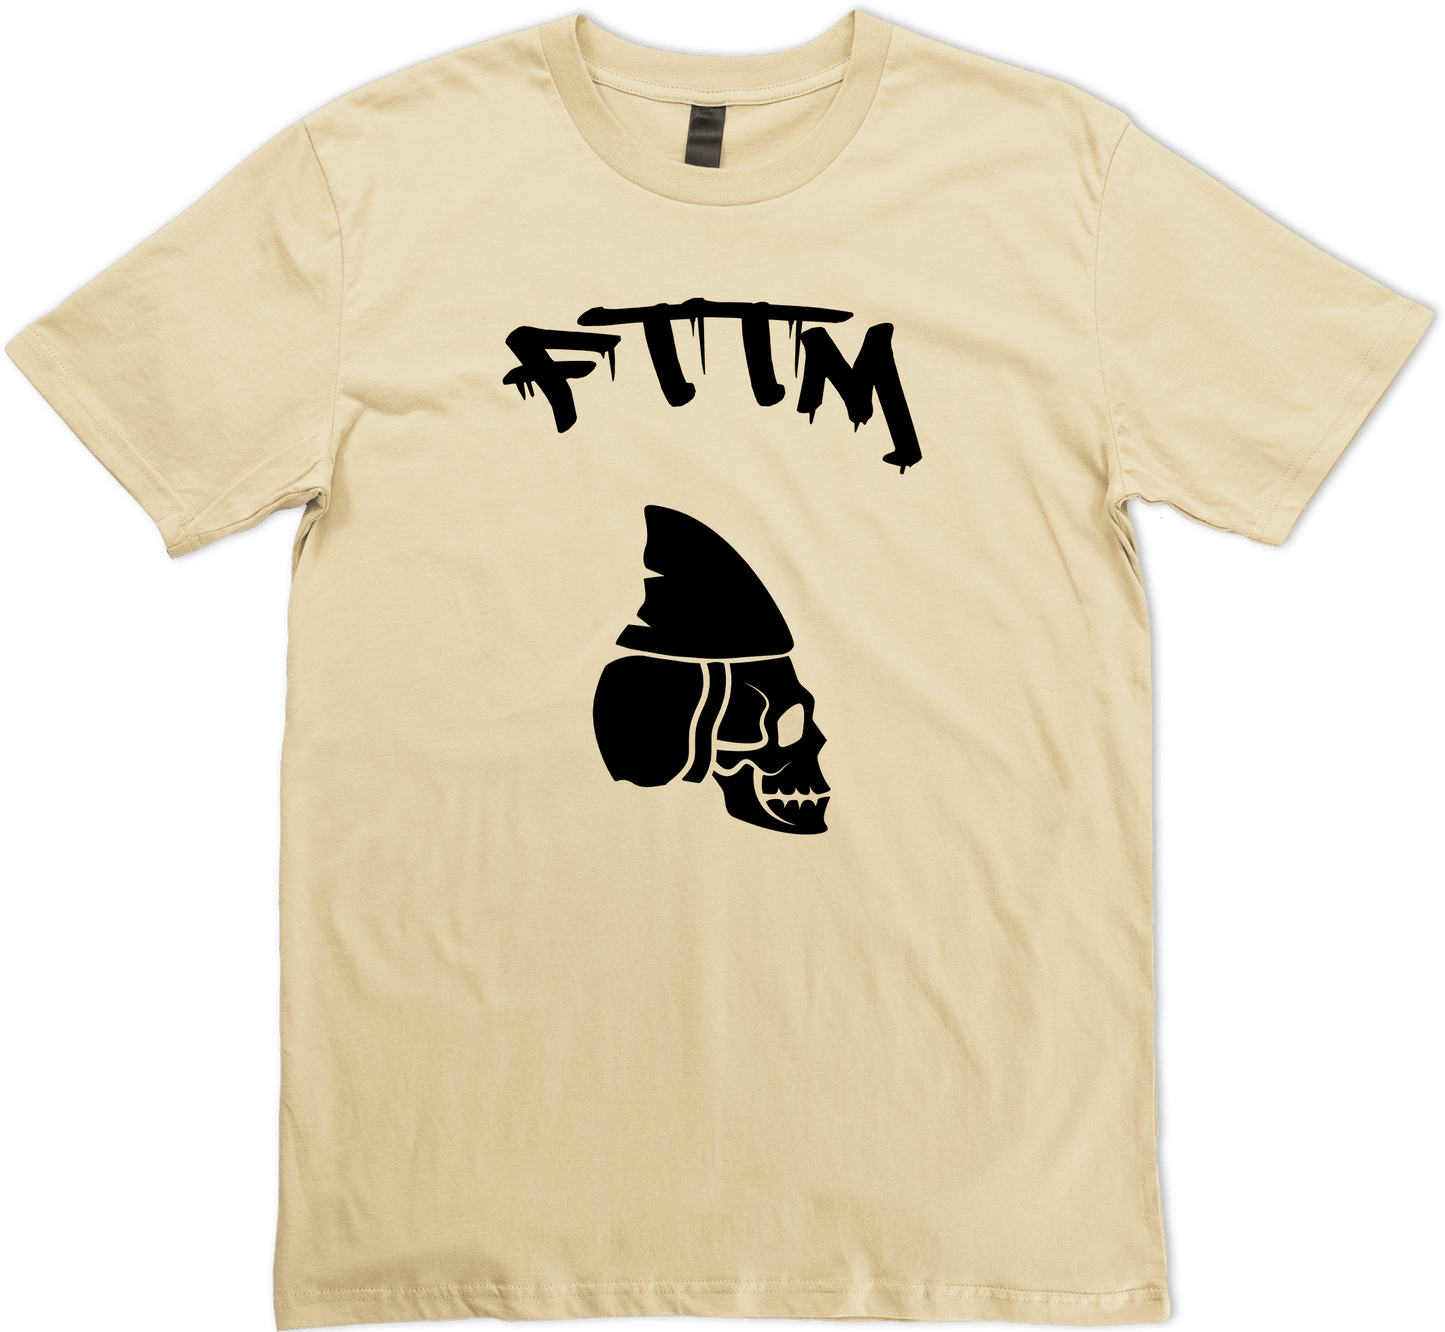 FTTM Logo Tan Shirt 